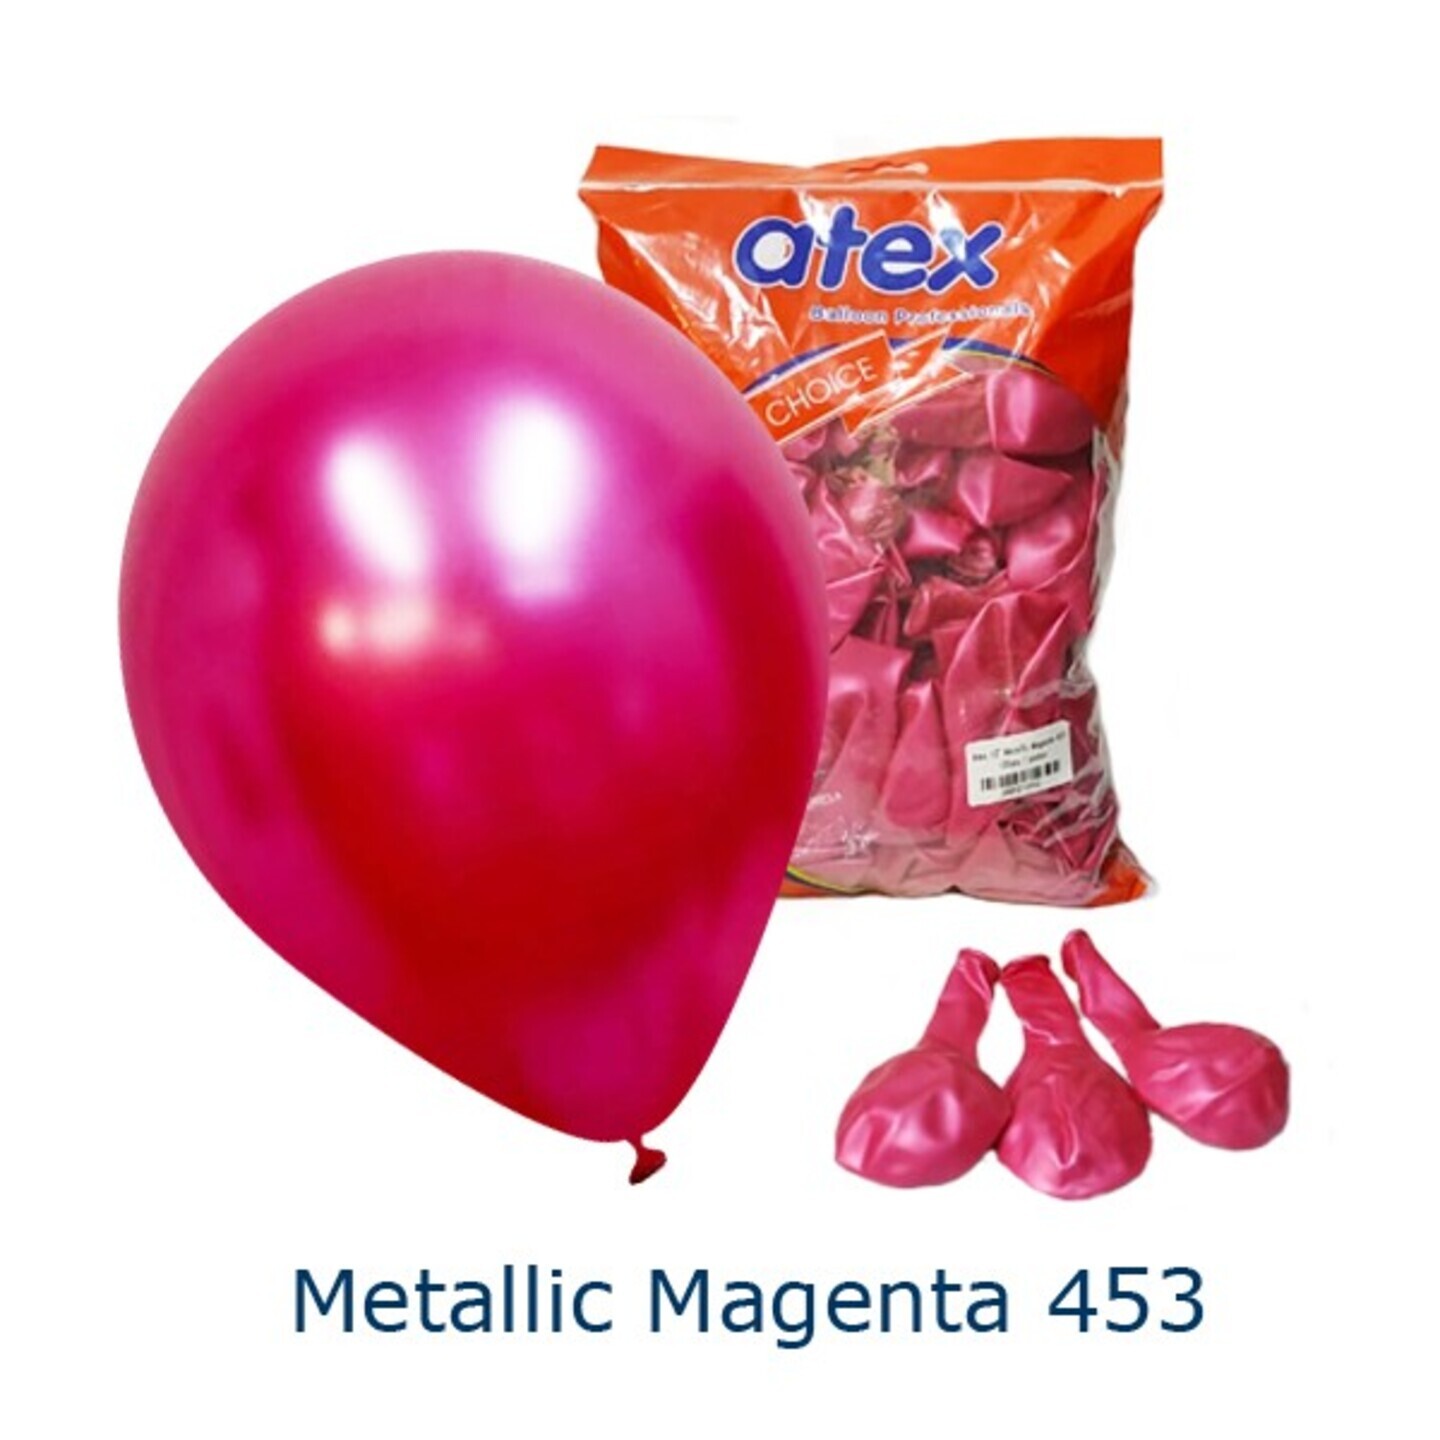 Metallic Magenta 453